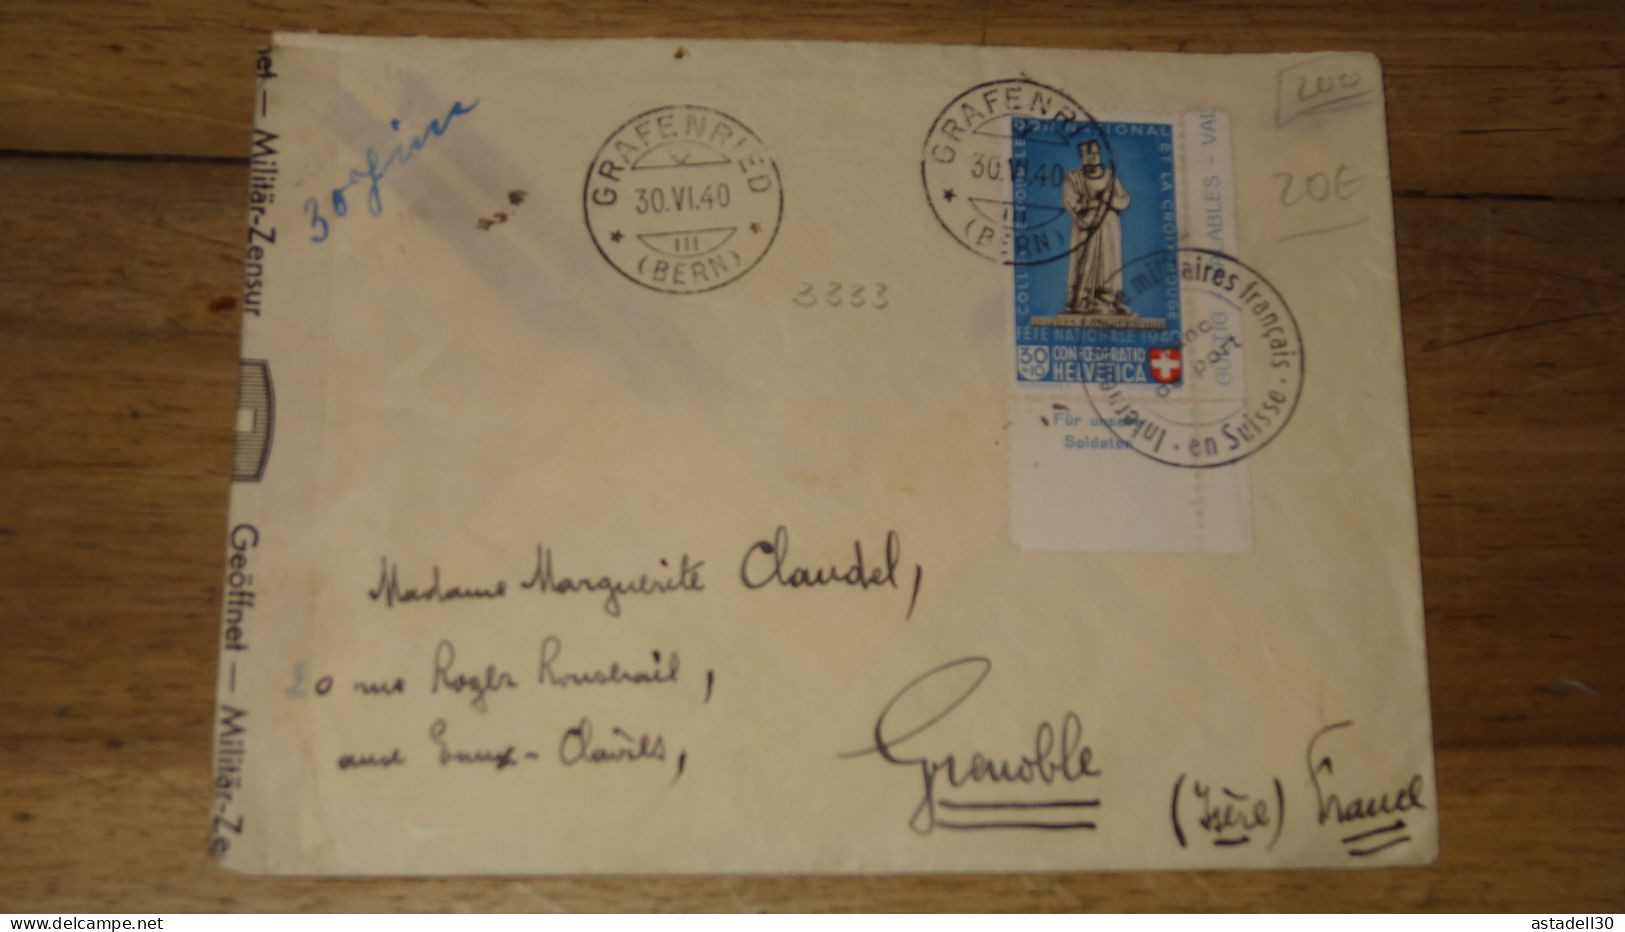 Enveloppe SUISSE Internement Militaires A Grafenried - 1940 ......... Boite1 ...... 240424-160 - Storia Postale